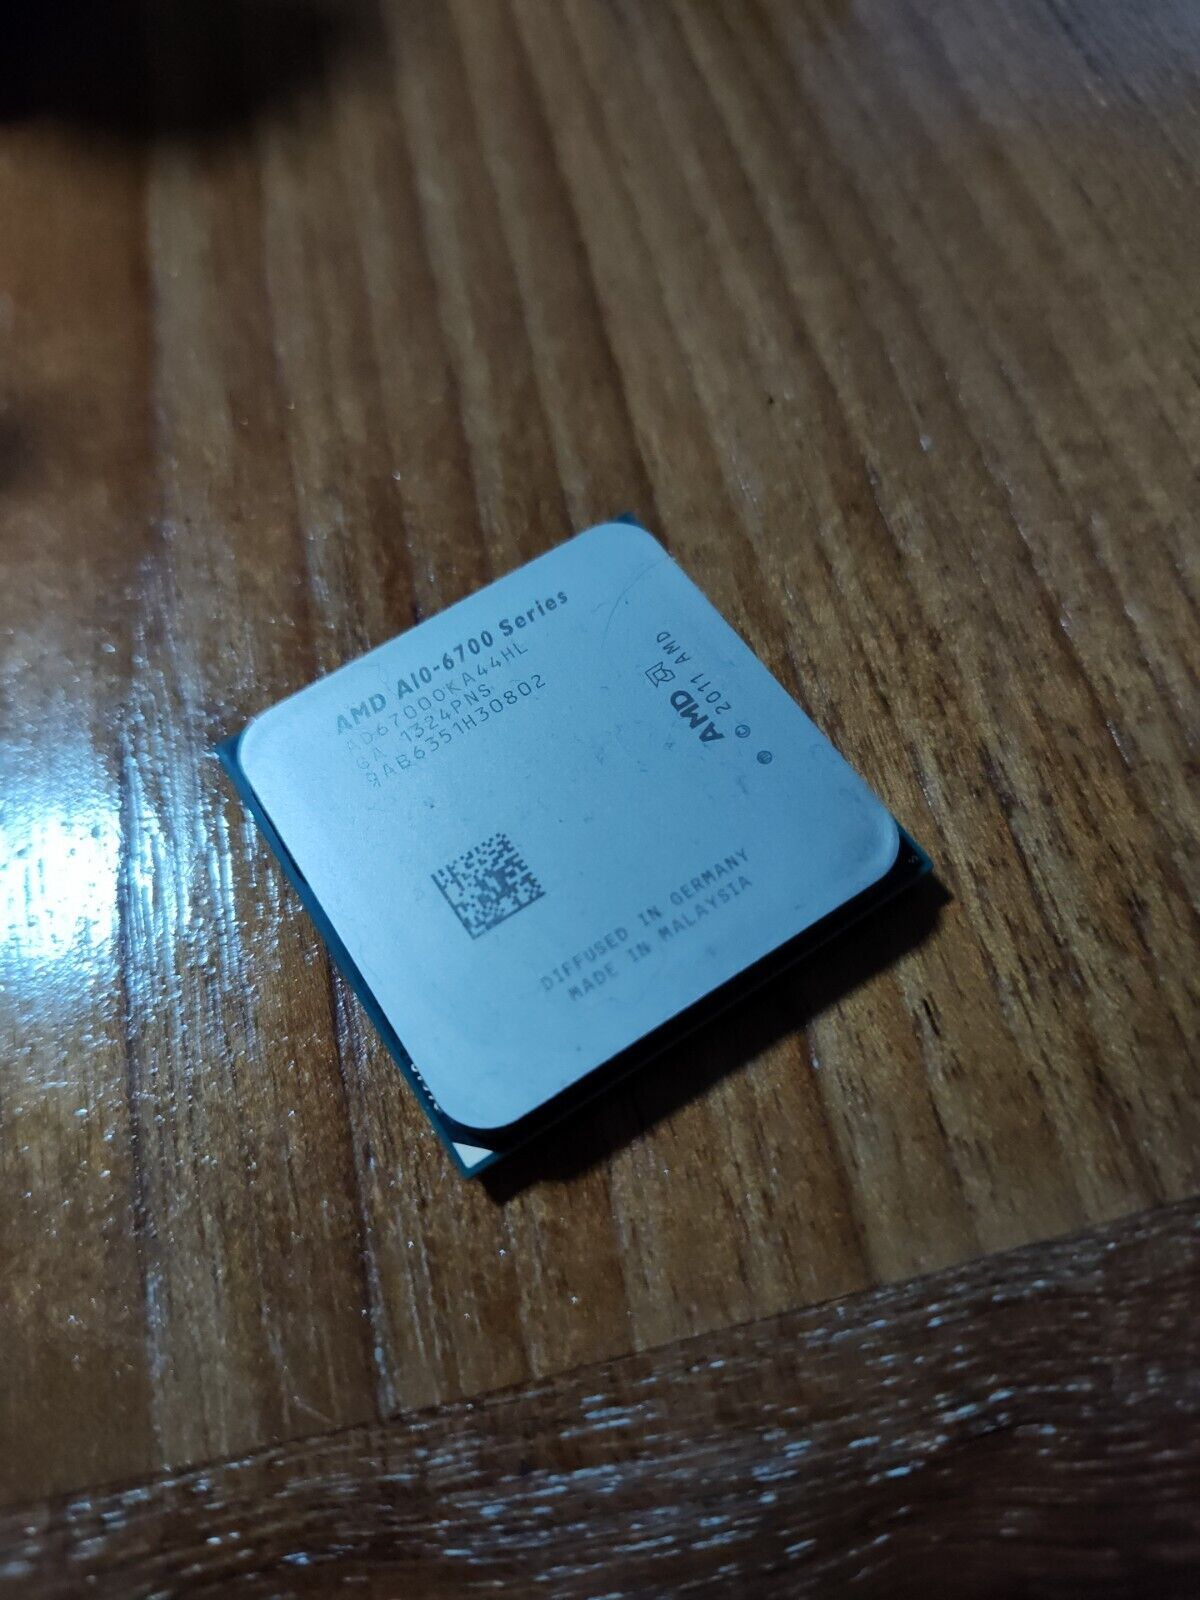 AMD A10-6700 CPU A10-Series Quad-Core 4MB 3.7GHz Socket FM2 65W Processor